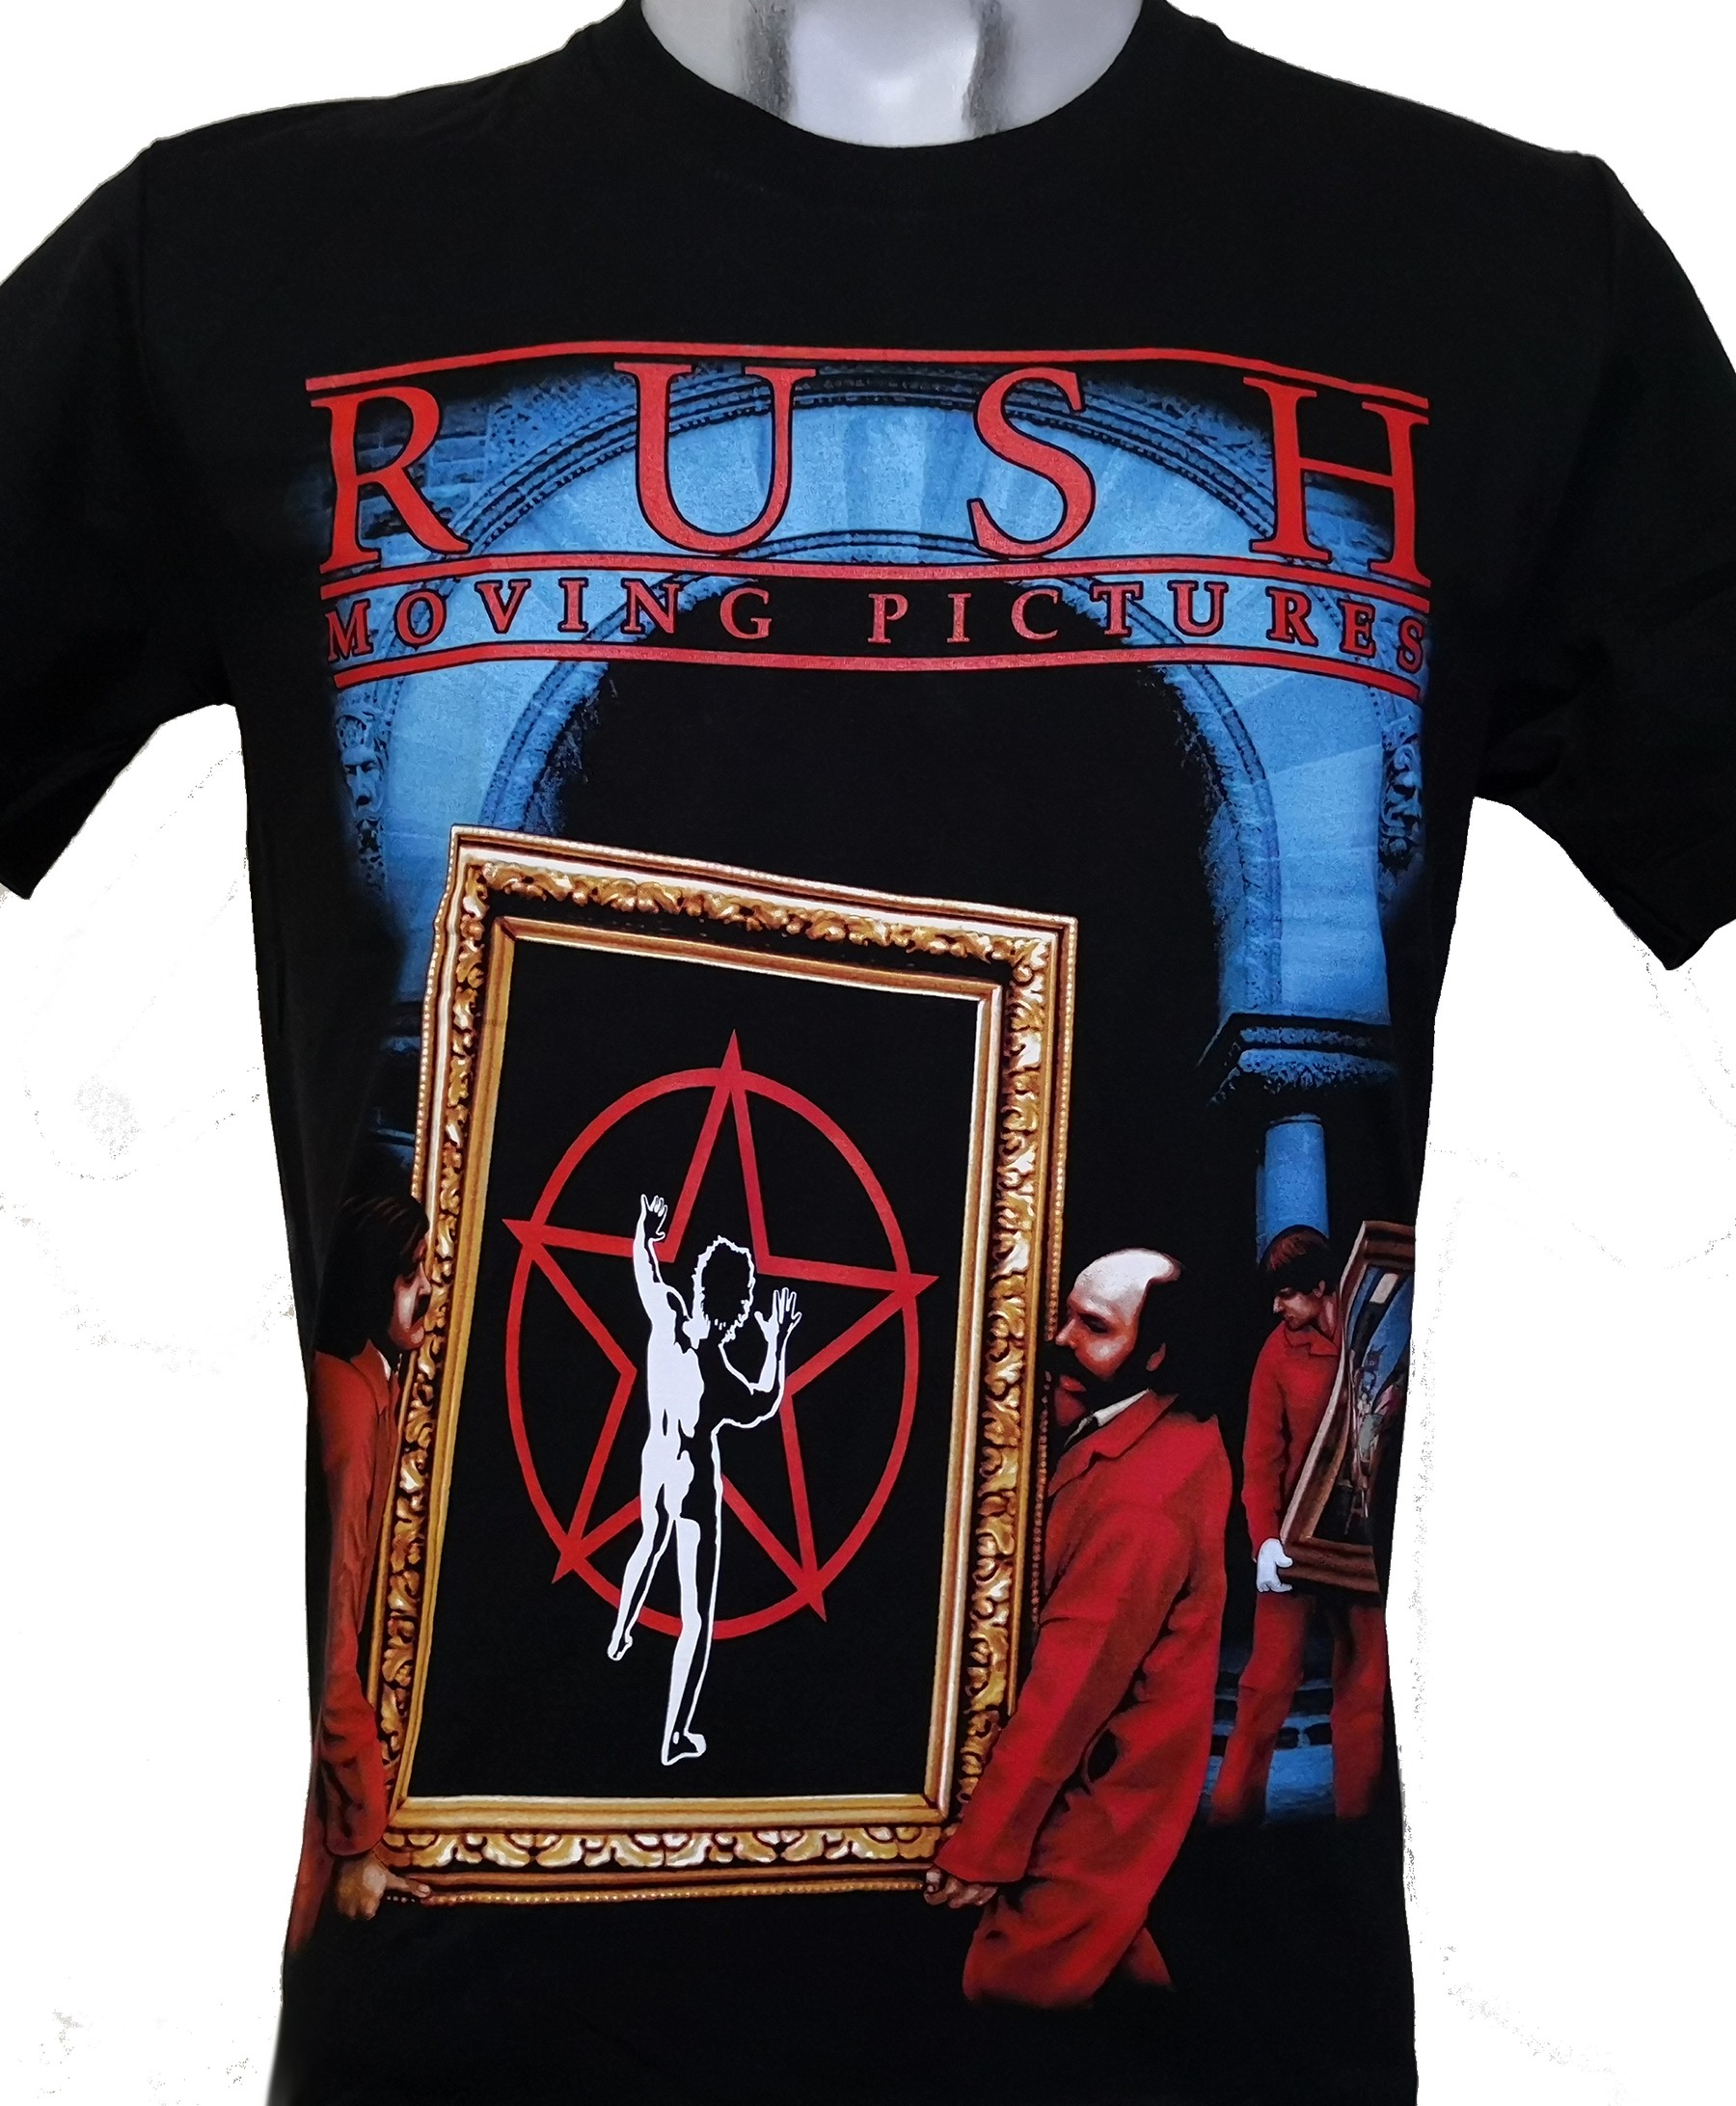 Rush t-shirt Moving Pictures – size RoxxBKK XL